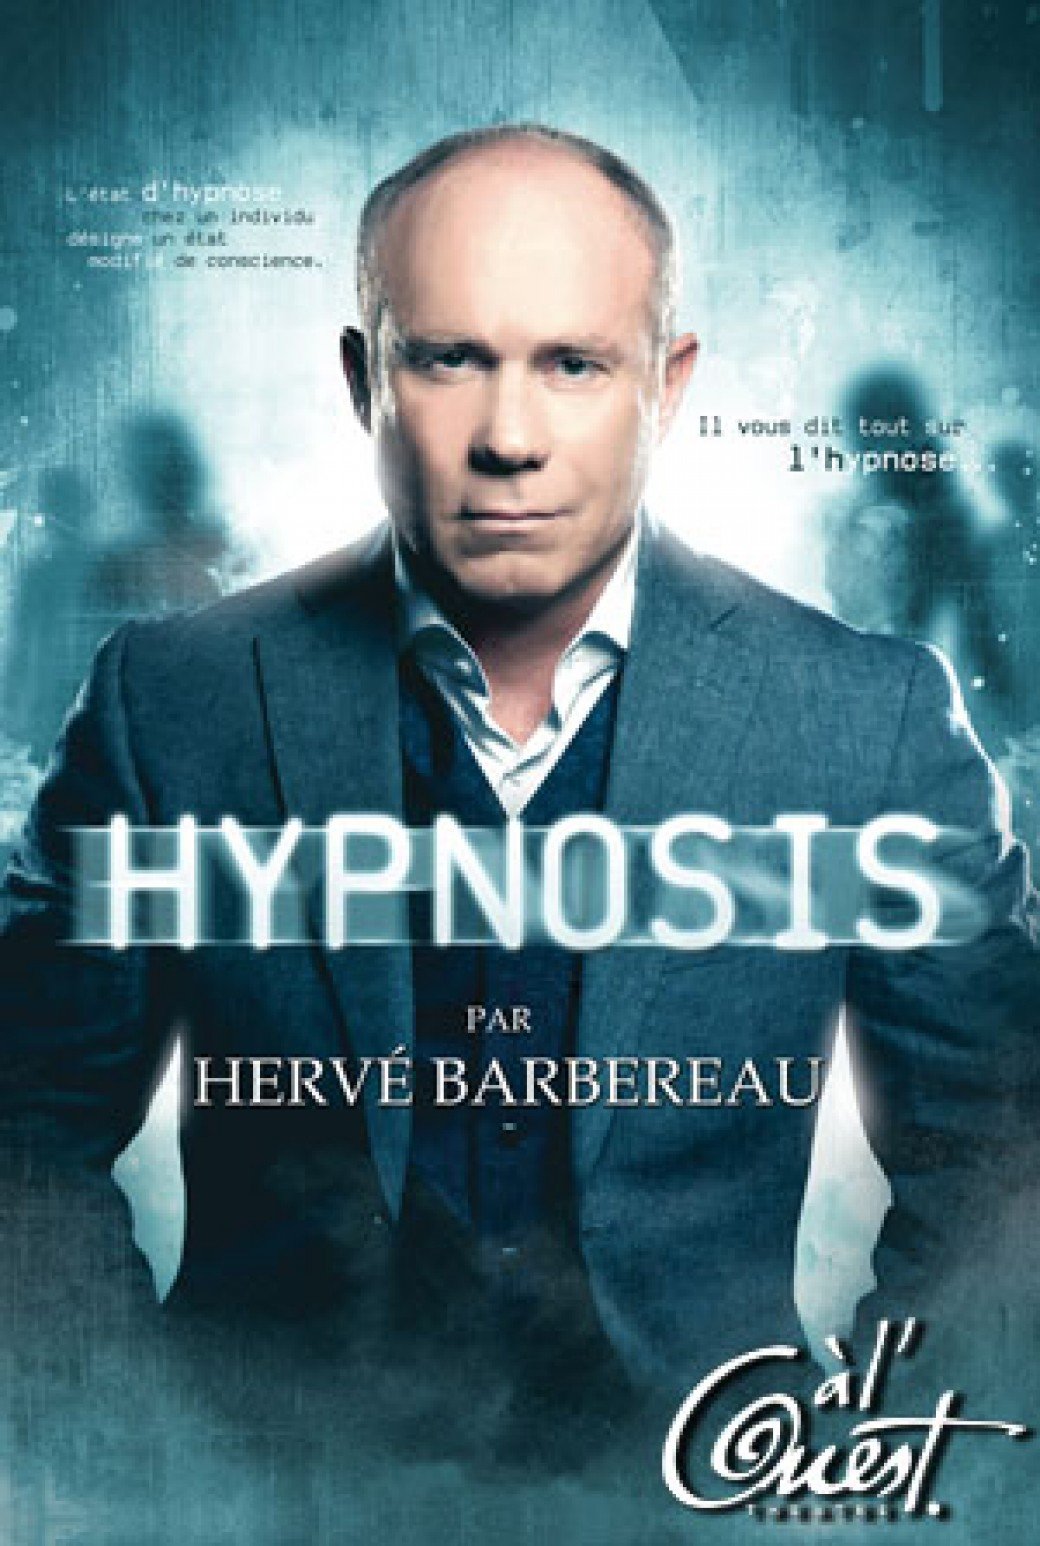 Hervé Barbereau - Hypnosis